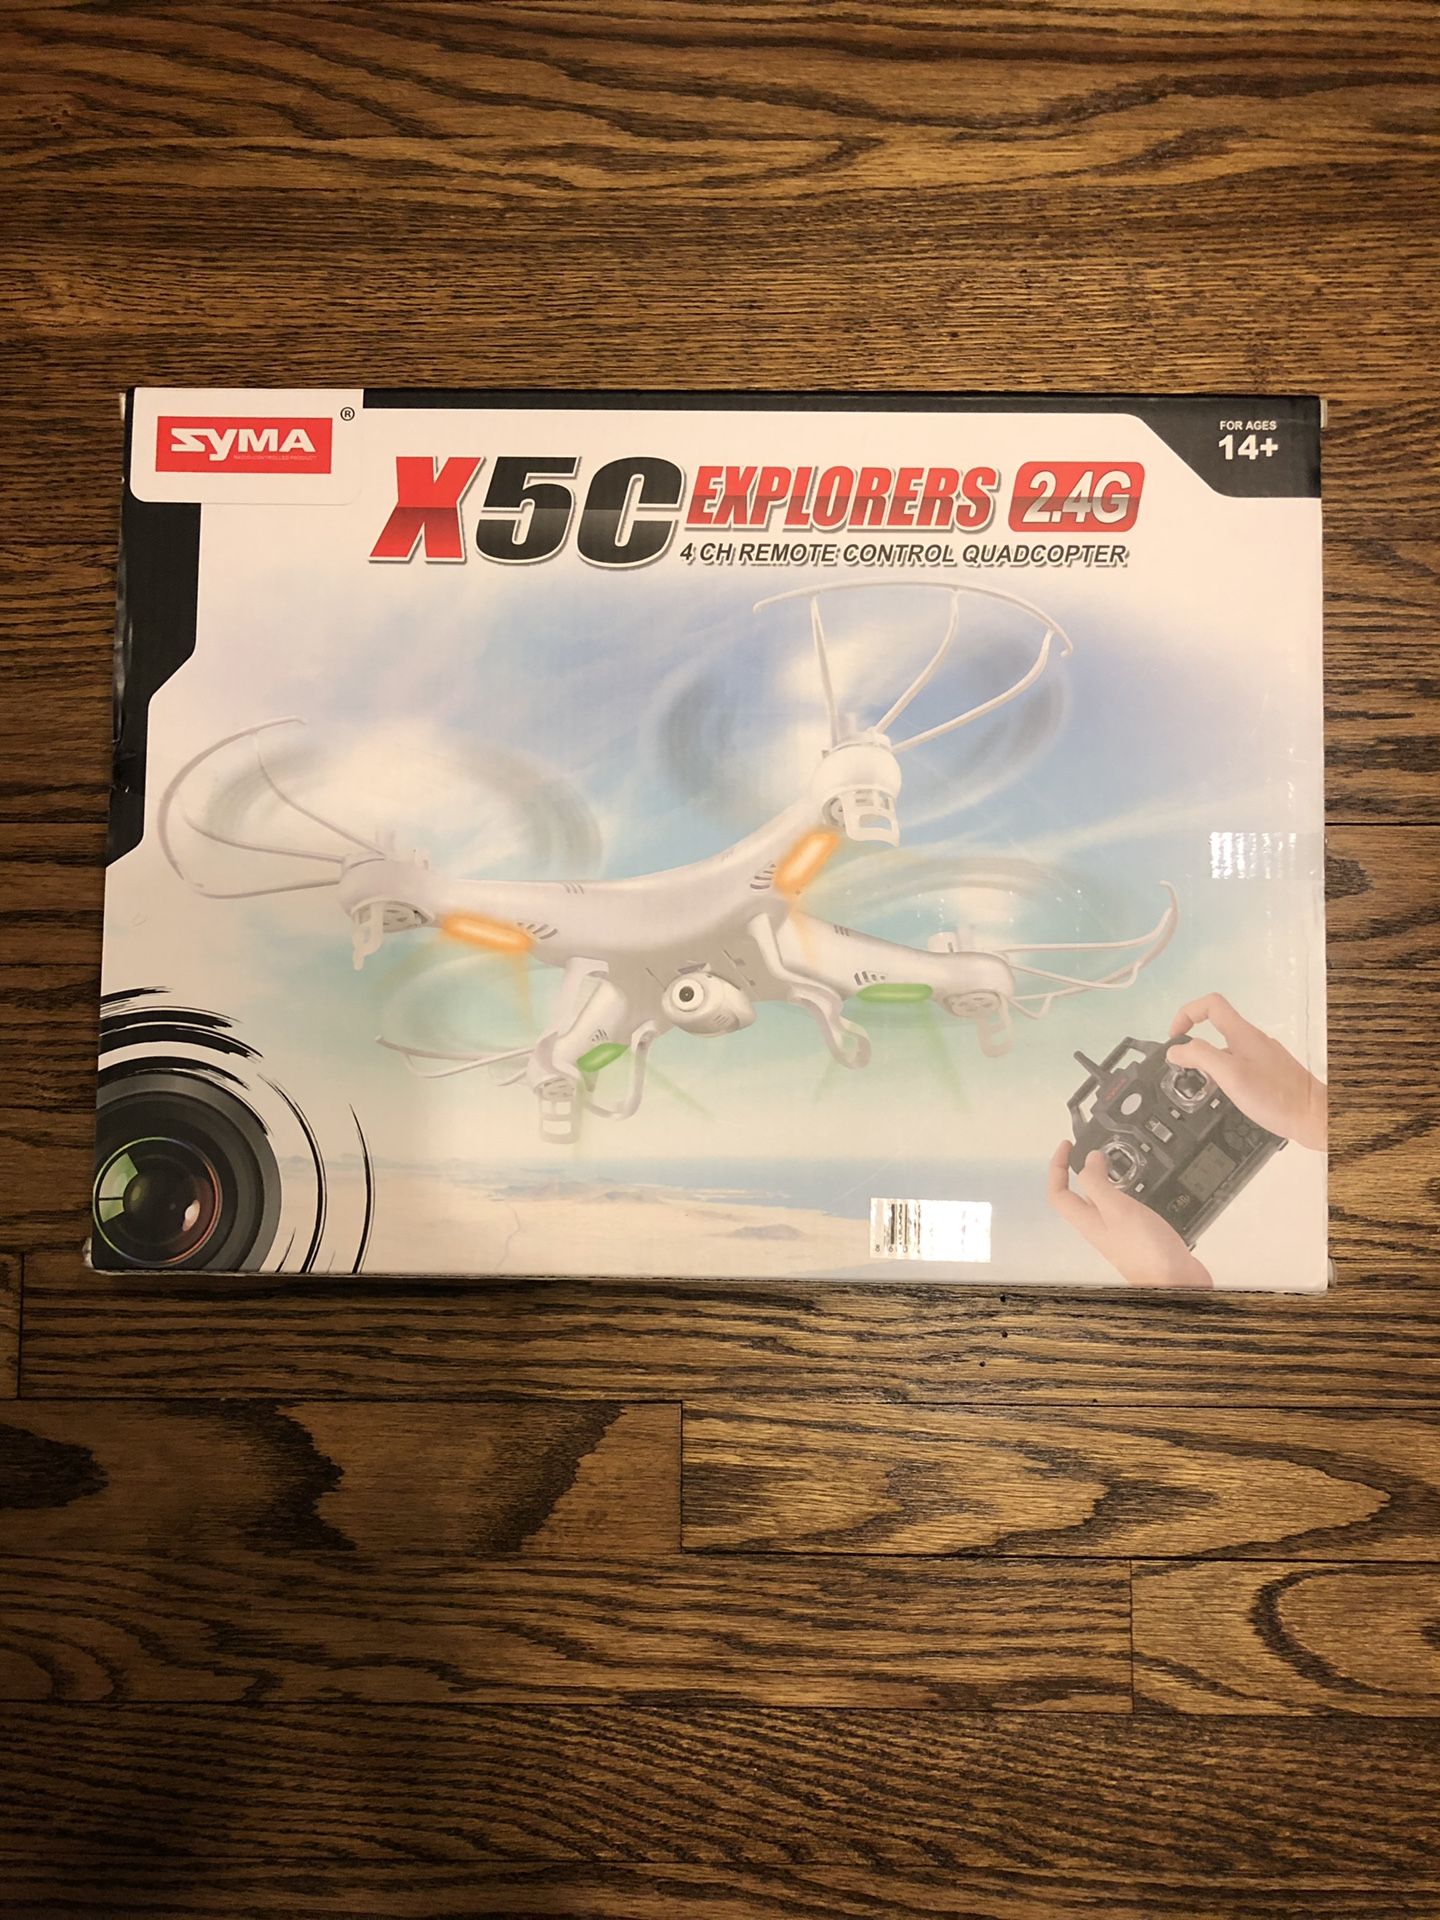 Syma X5c Explorers 2.4g 4ch Rc Quadcopter with Hd Camera 360 Eversion